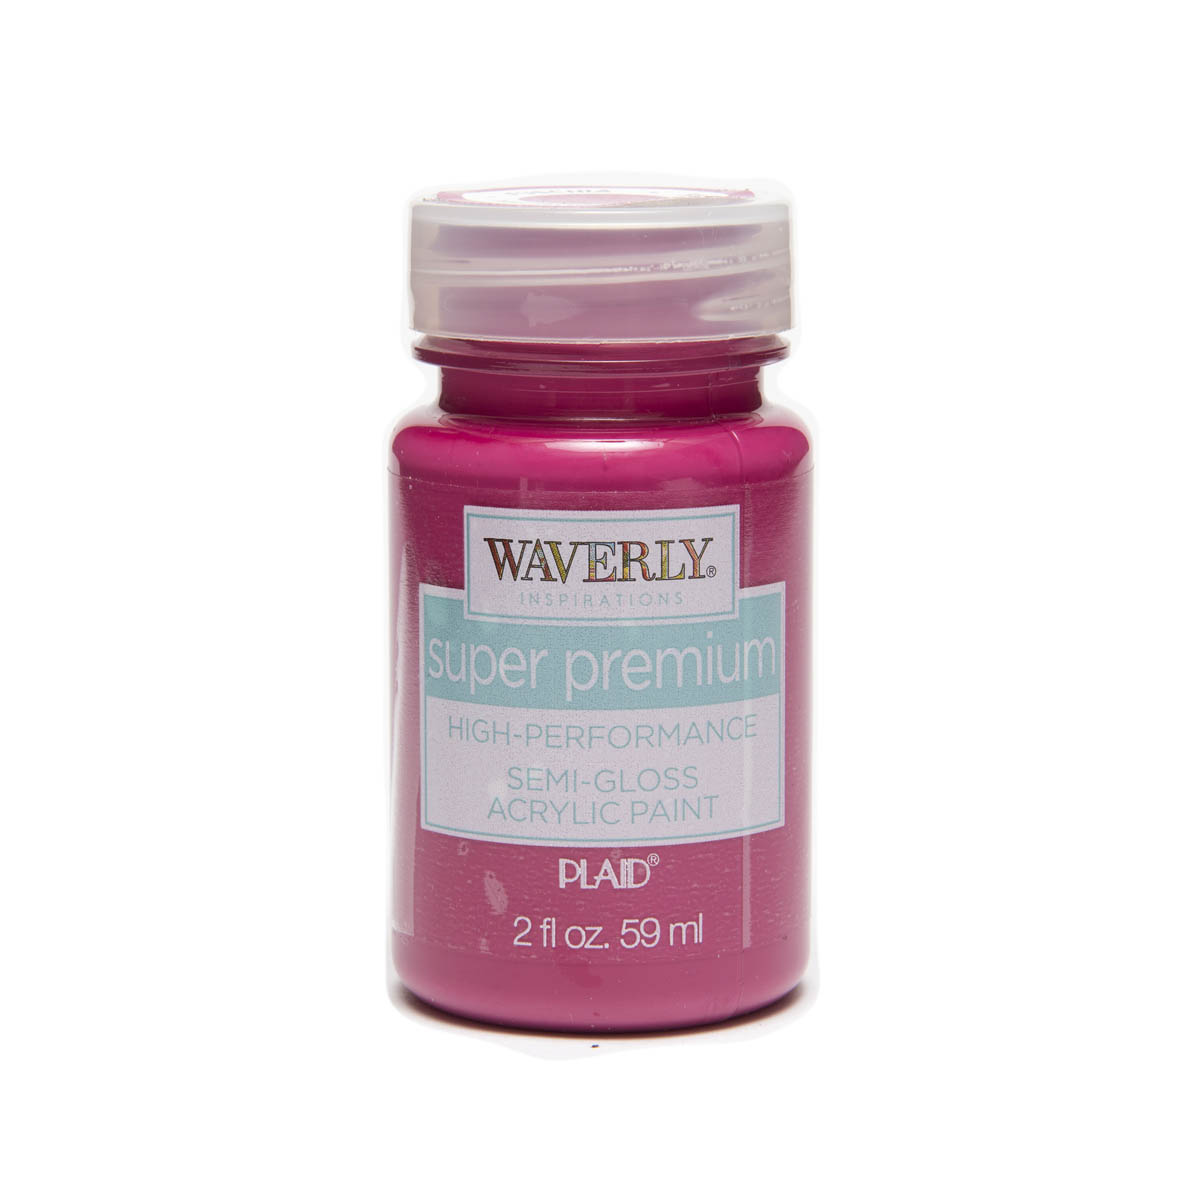 Waverly ® Inspirations Super Premium Semi-Gloss Acrylic Paint - Fuchsia, 2 oz. - 60605E